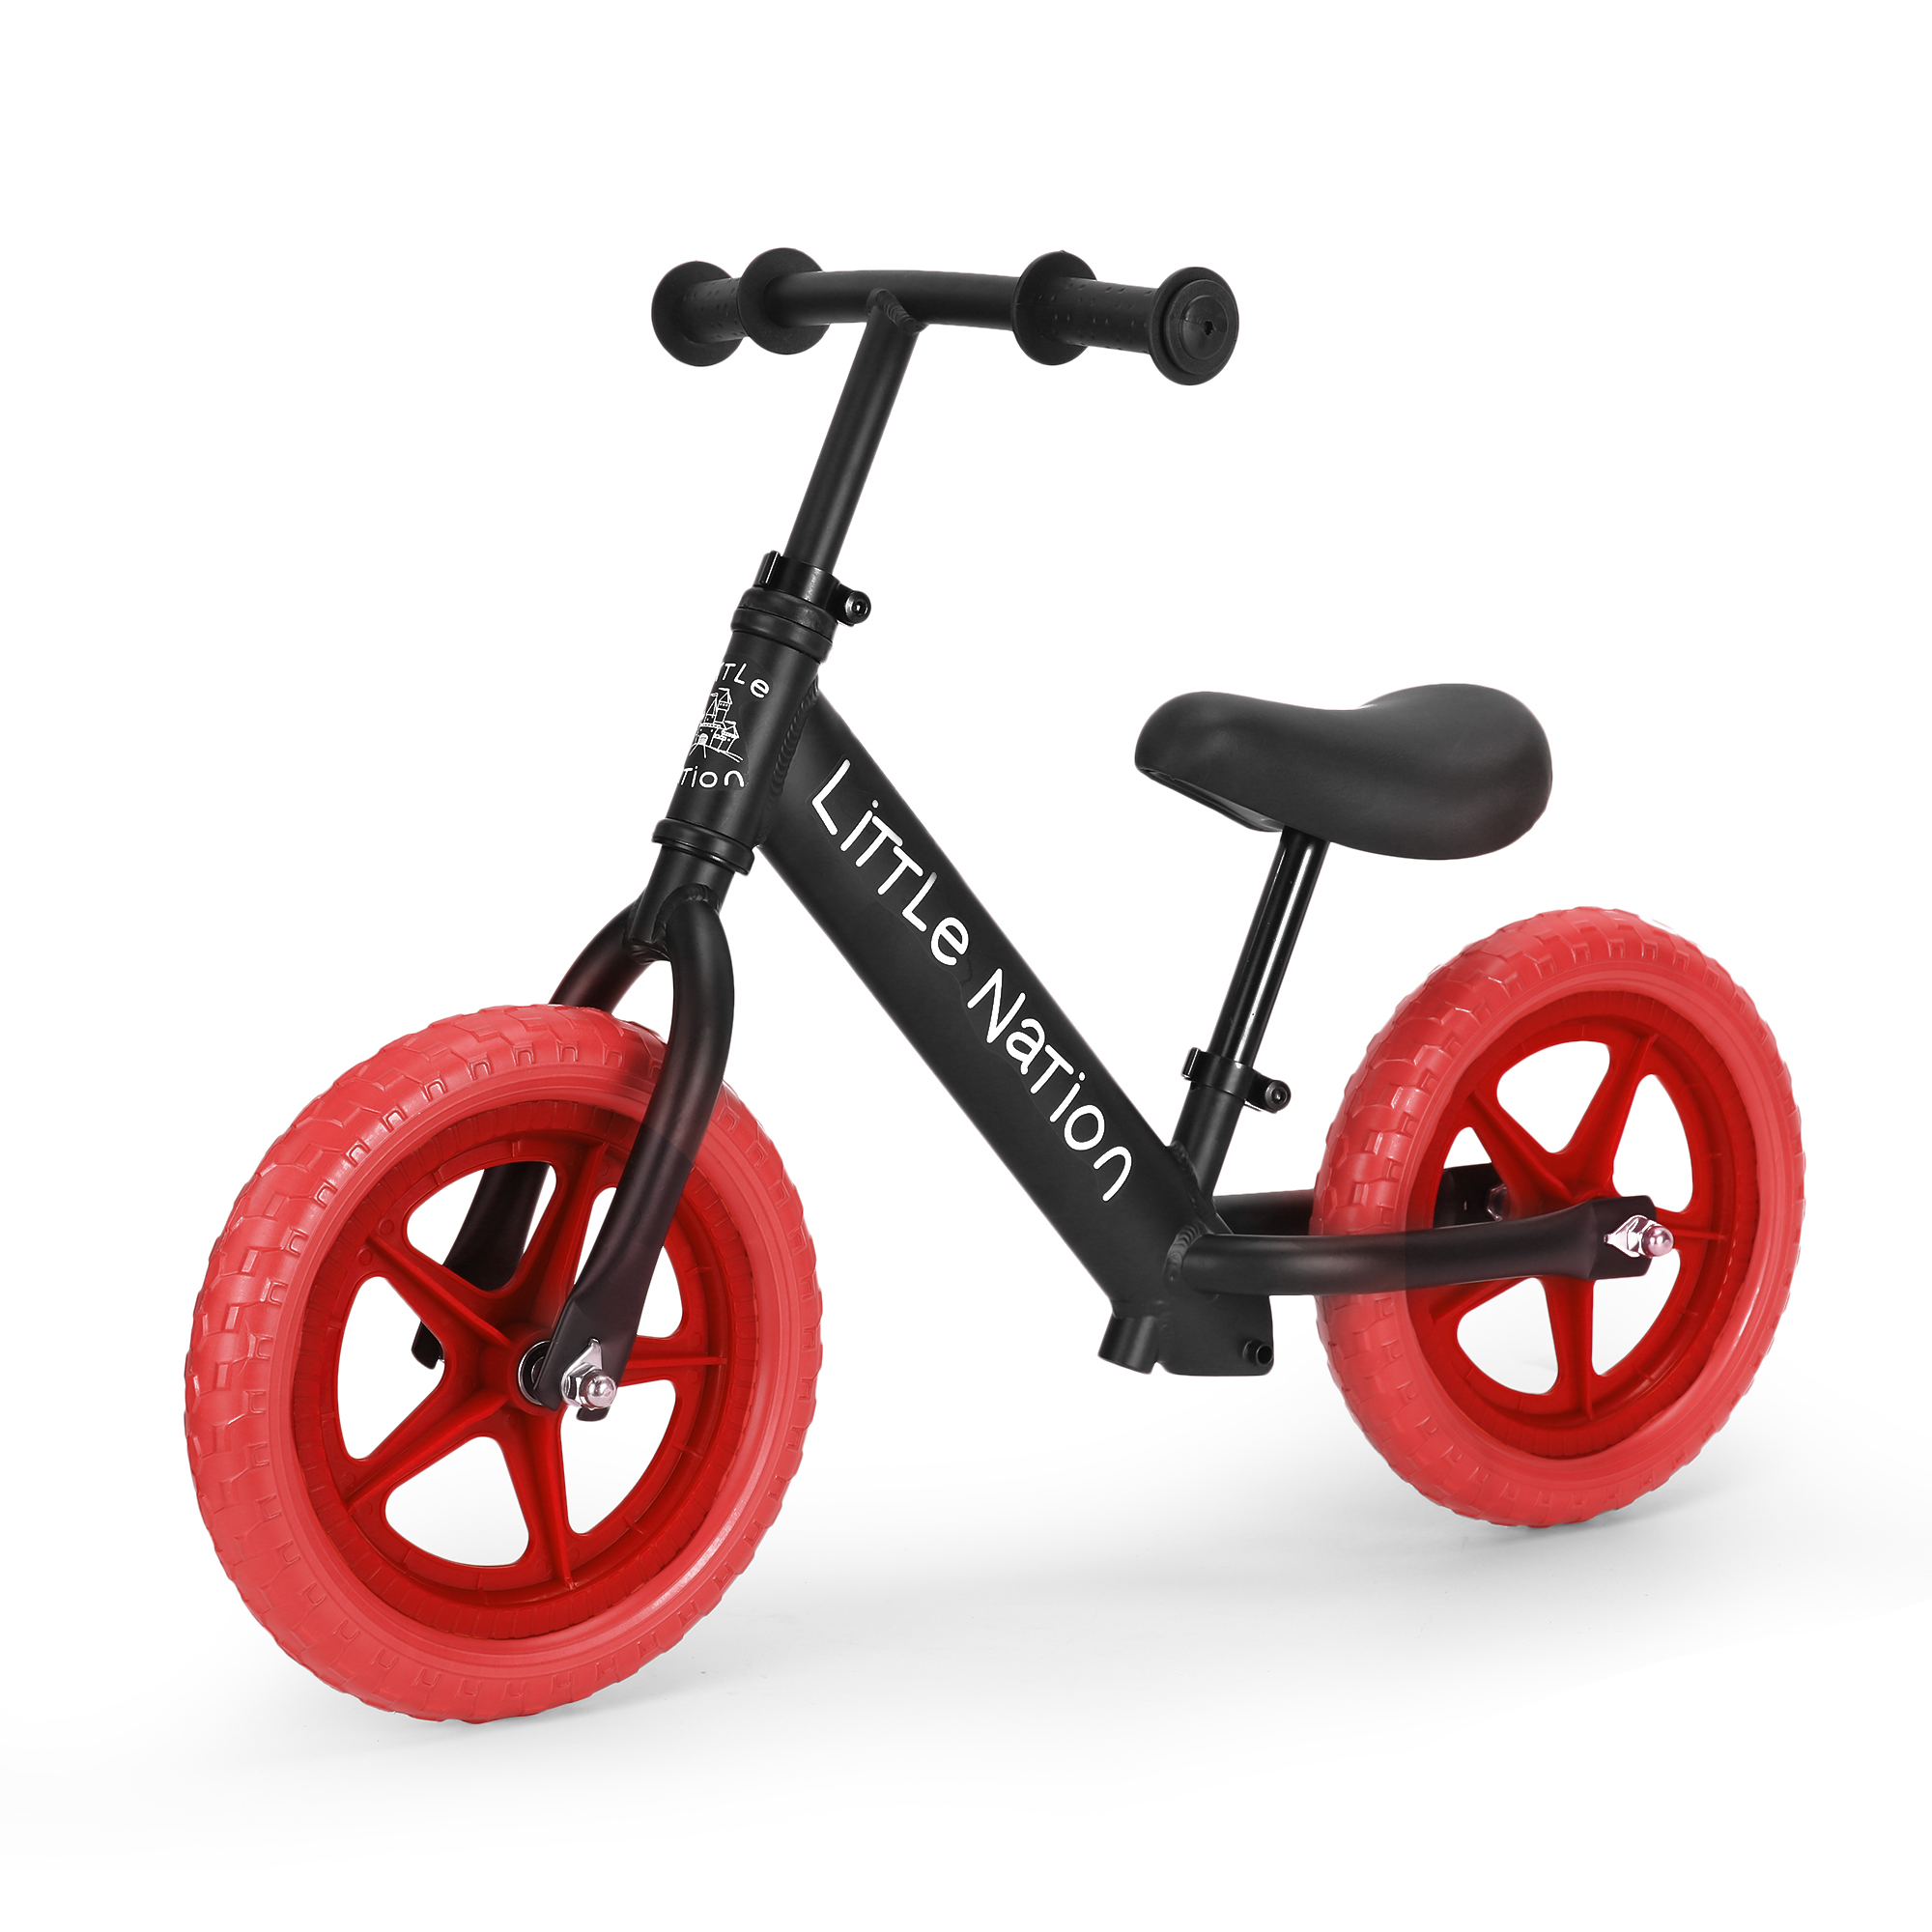 FoxHunter Children’s Balance Bike My First Bike Training Cycle for Kids 